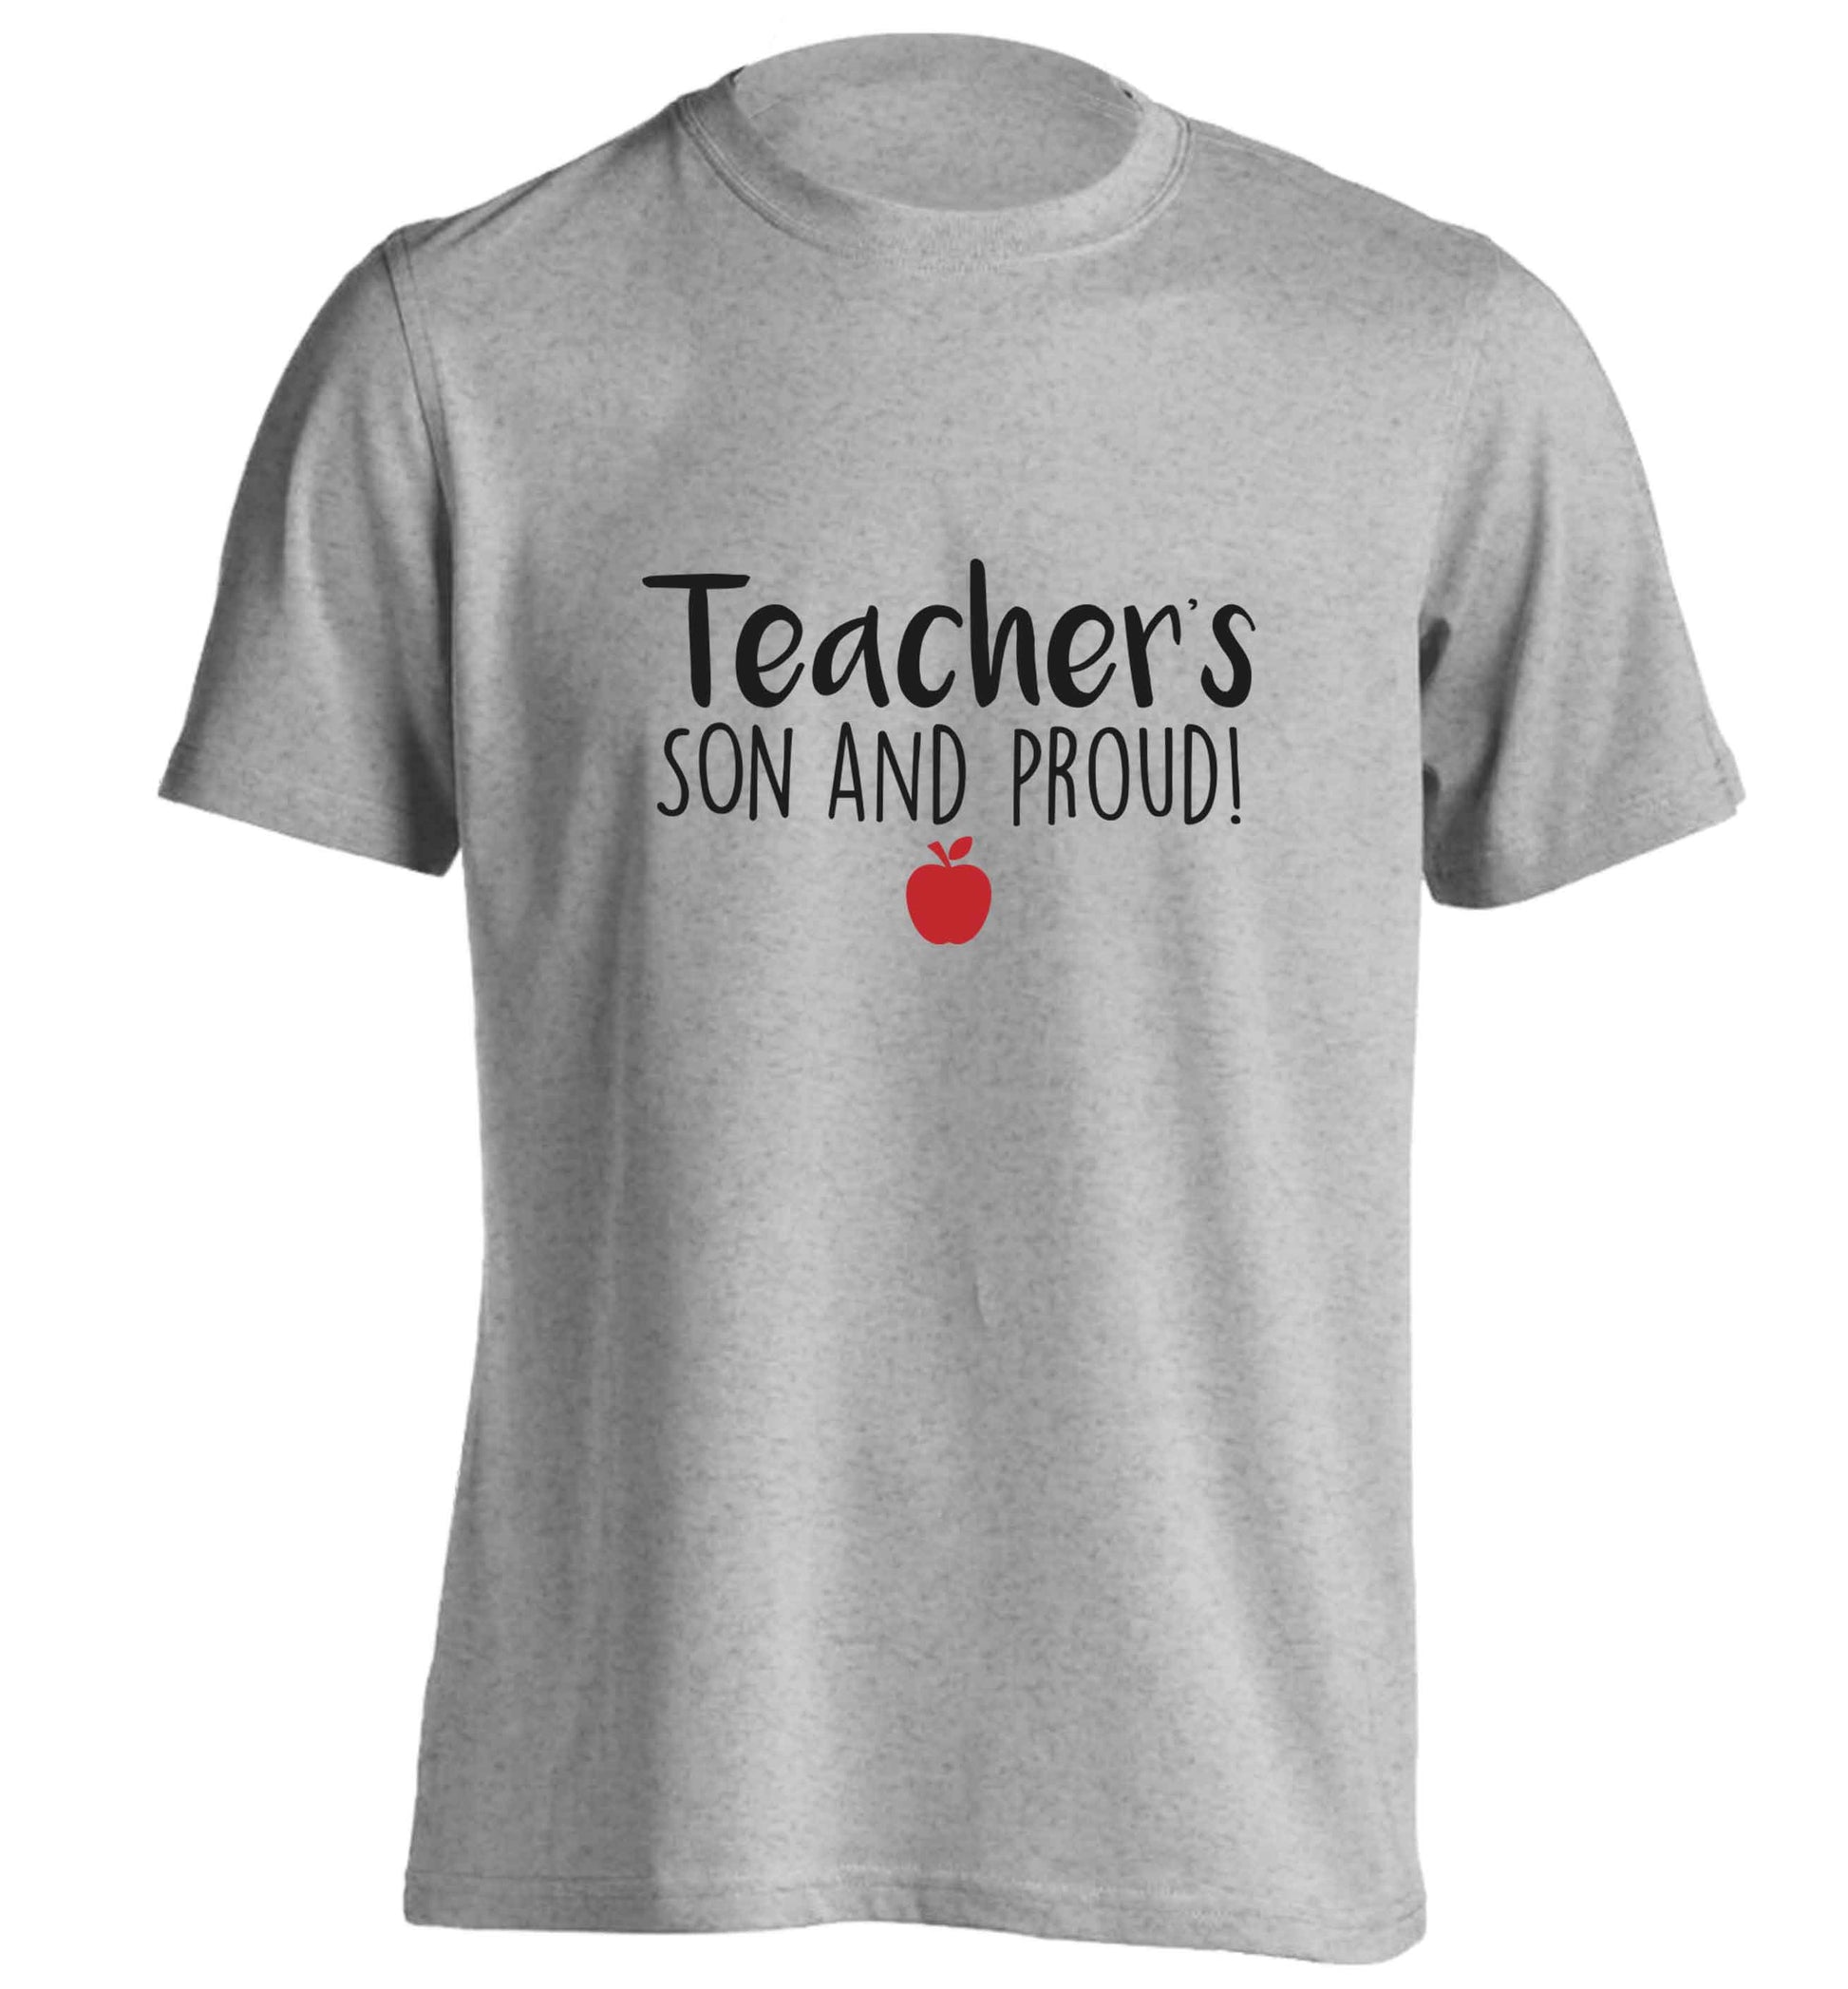 Teachers son and proud adults unisex grey Tshirt 2XL